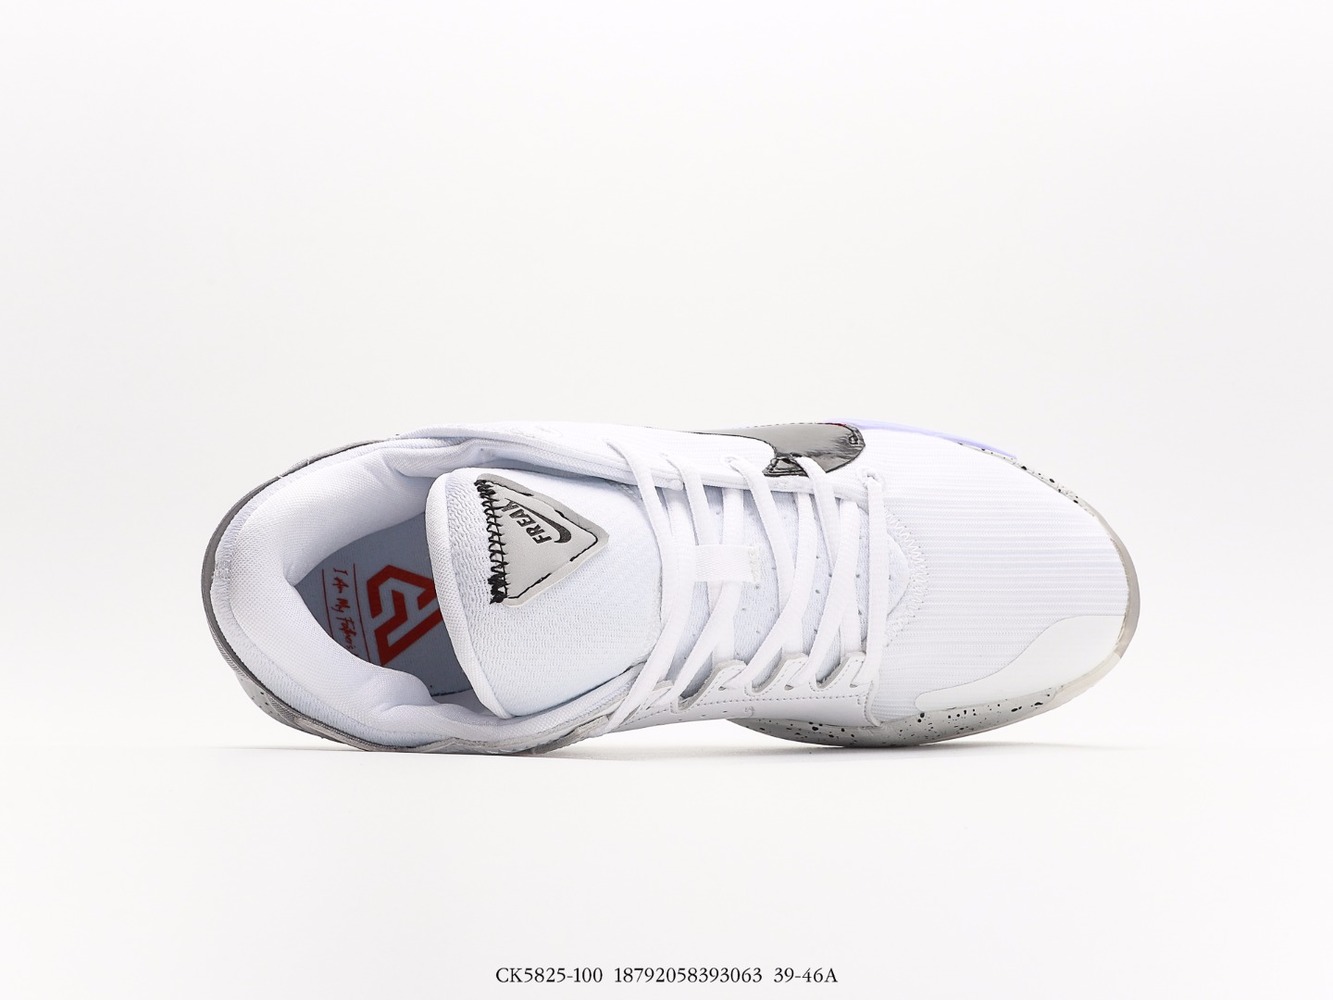 Nike Zoom Freak 2 White Cement_CK5825-100